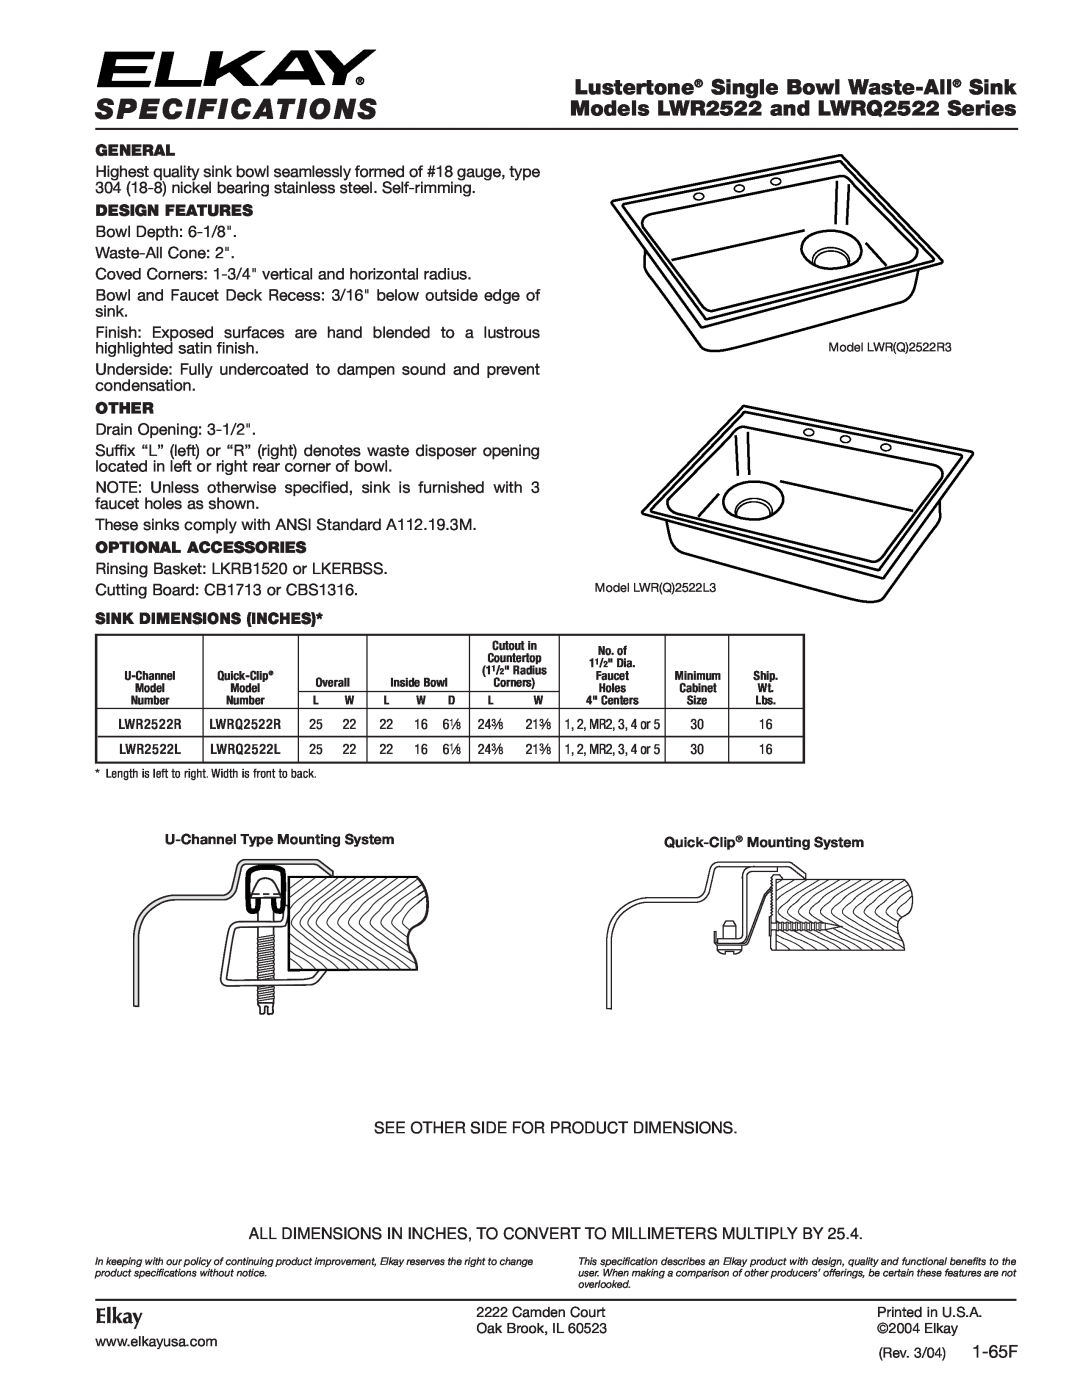 Elkay LWRQ2522R specifications Specifications, Lustertone Single Bowl Waste-All Sink, Models LWR2522 and LWRQ2522 Series 